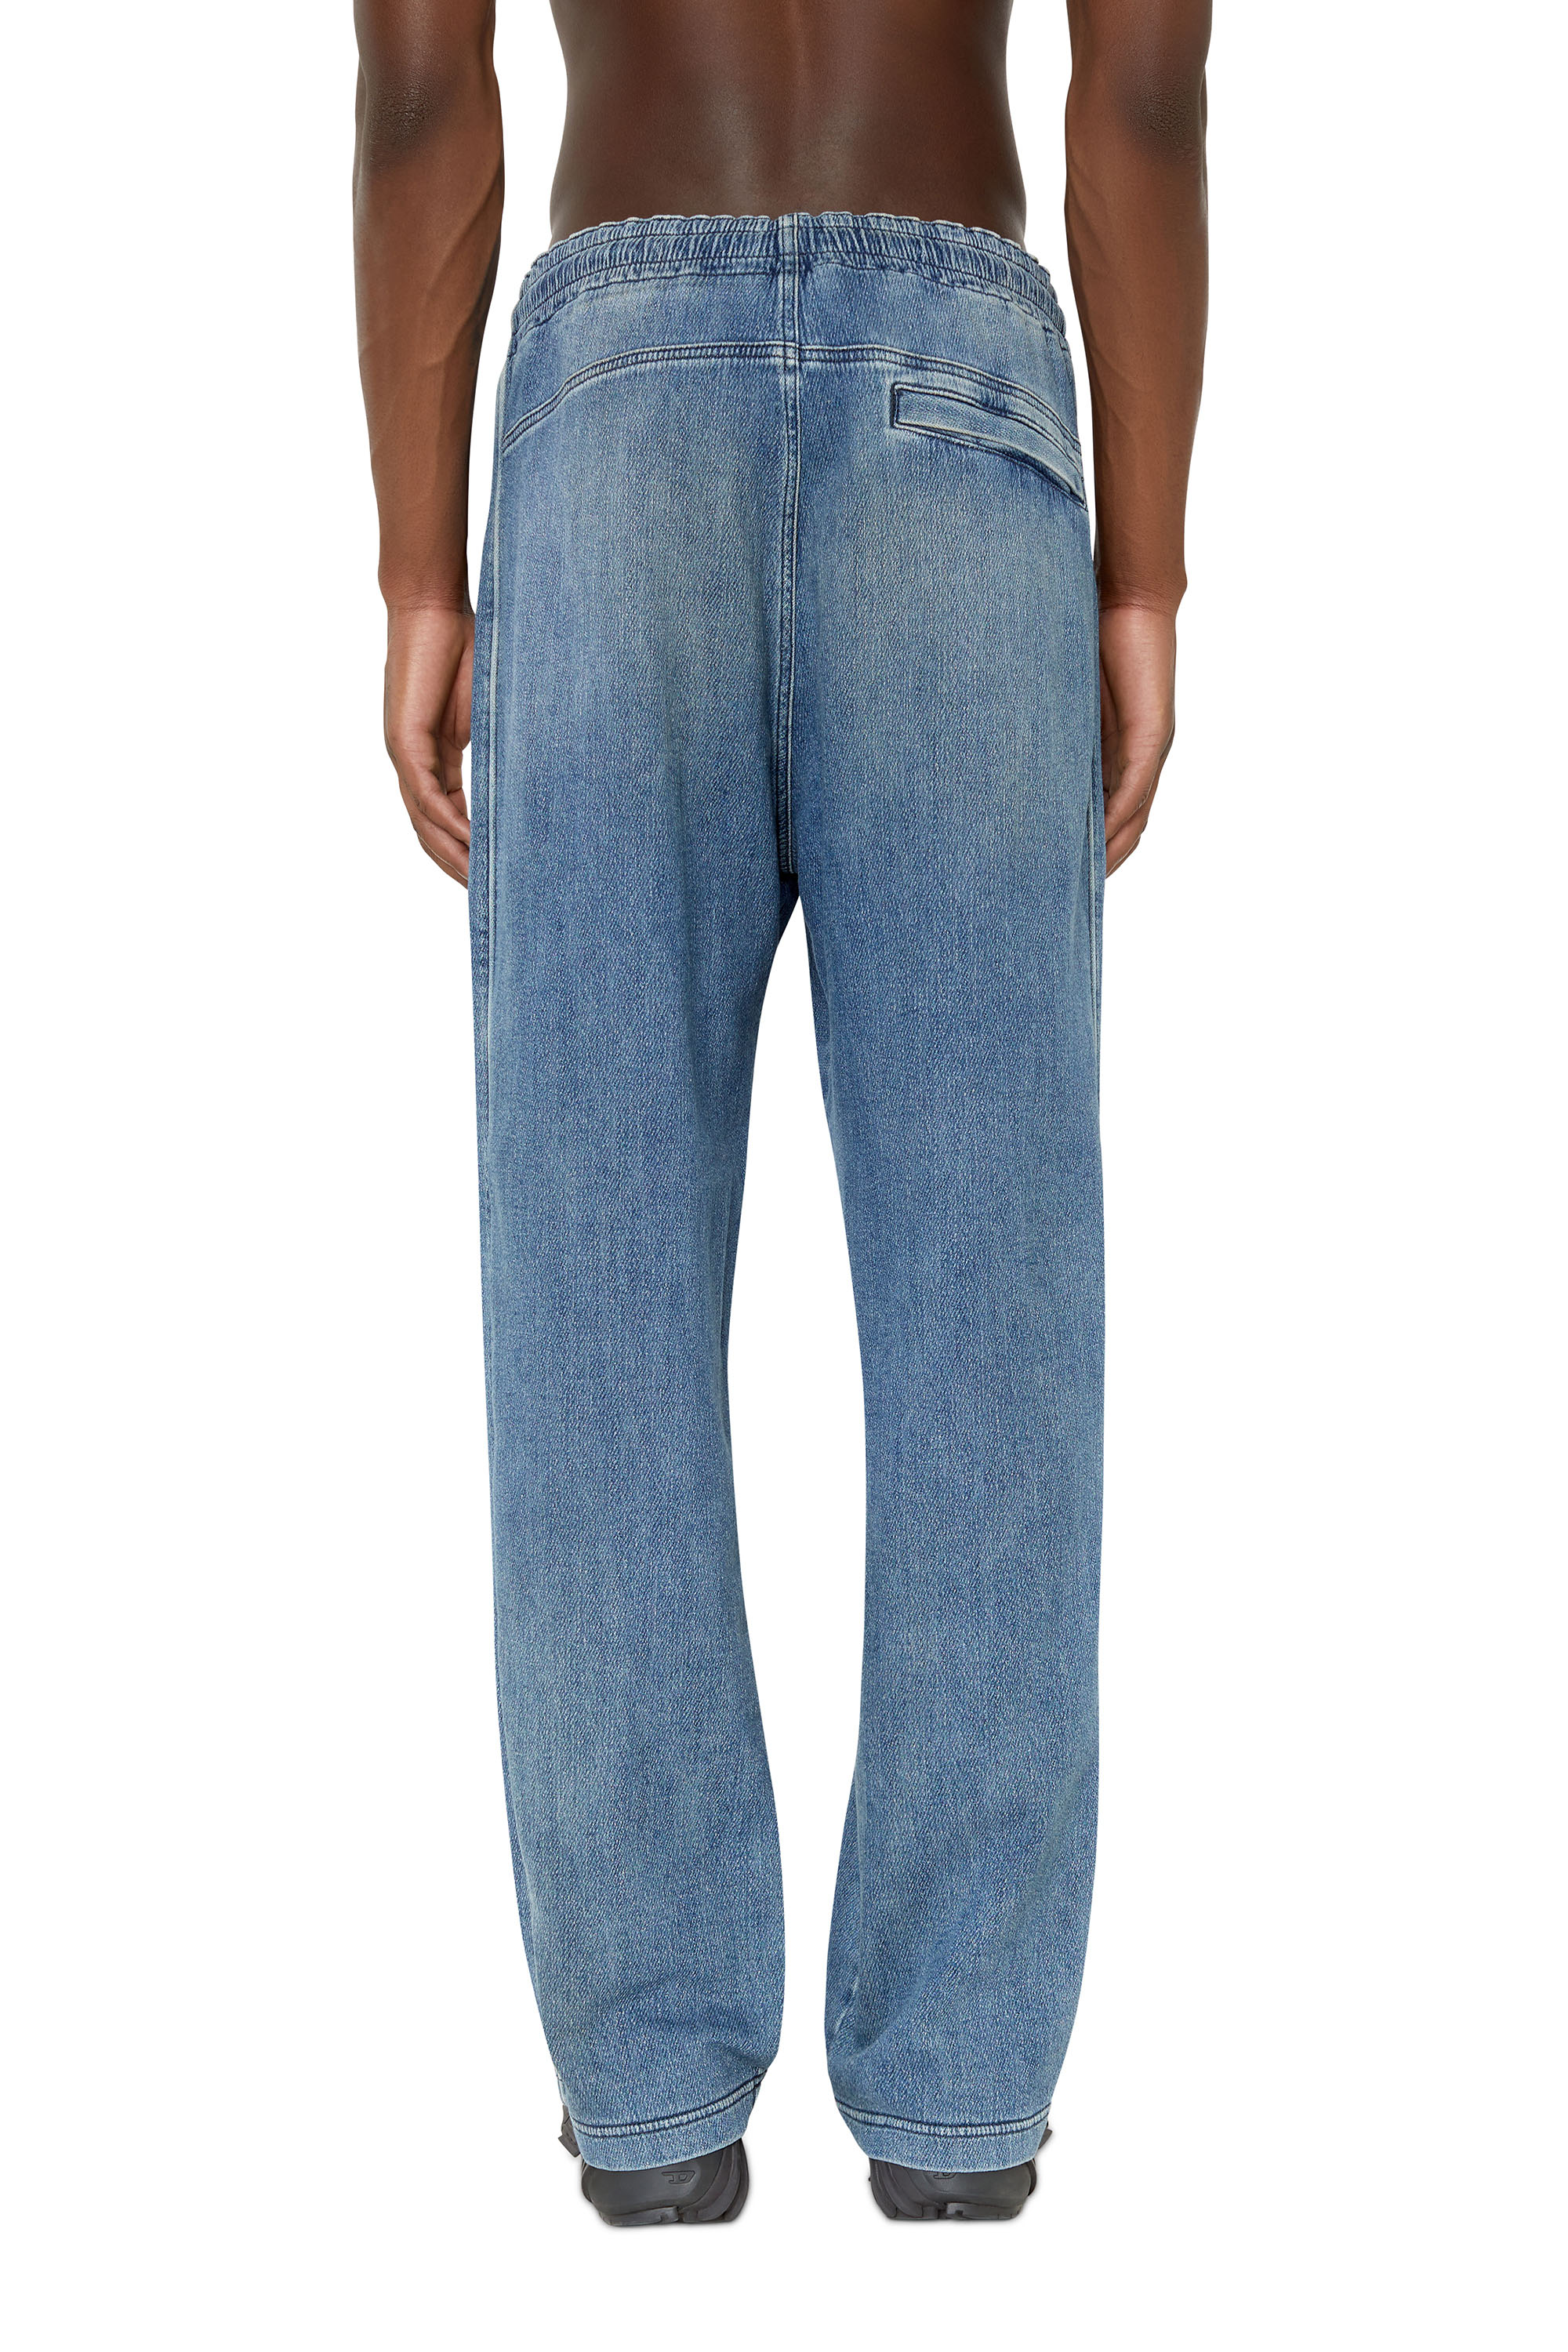 Men's JoggJeans®: Slim, tapered, straight jeans | Diesel®